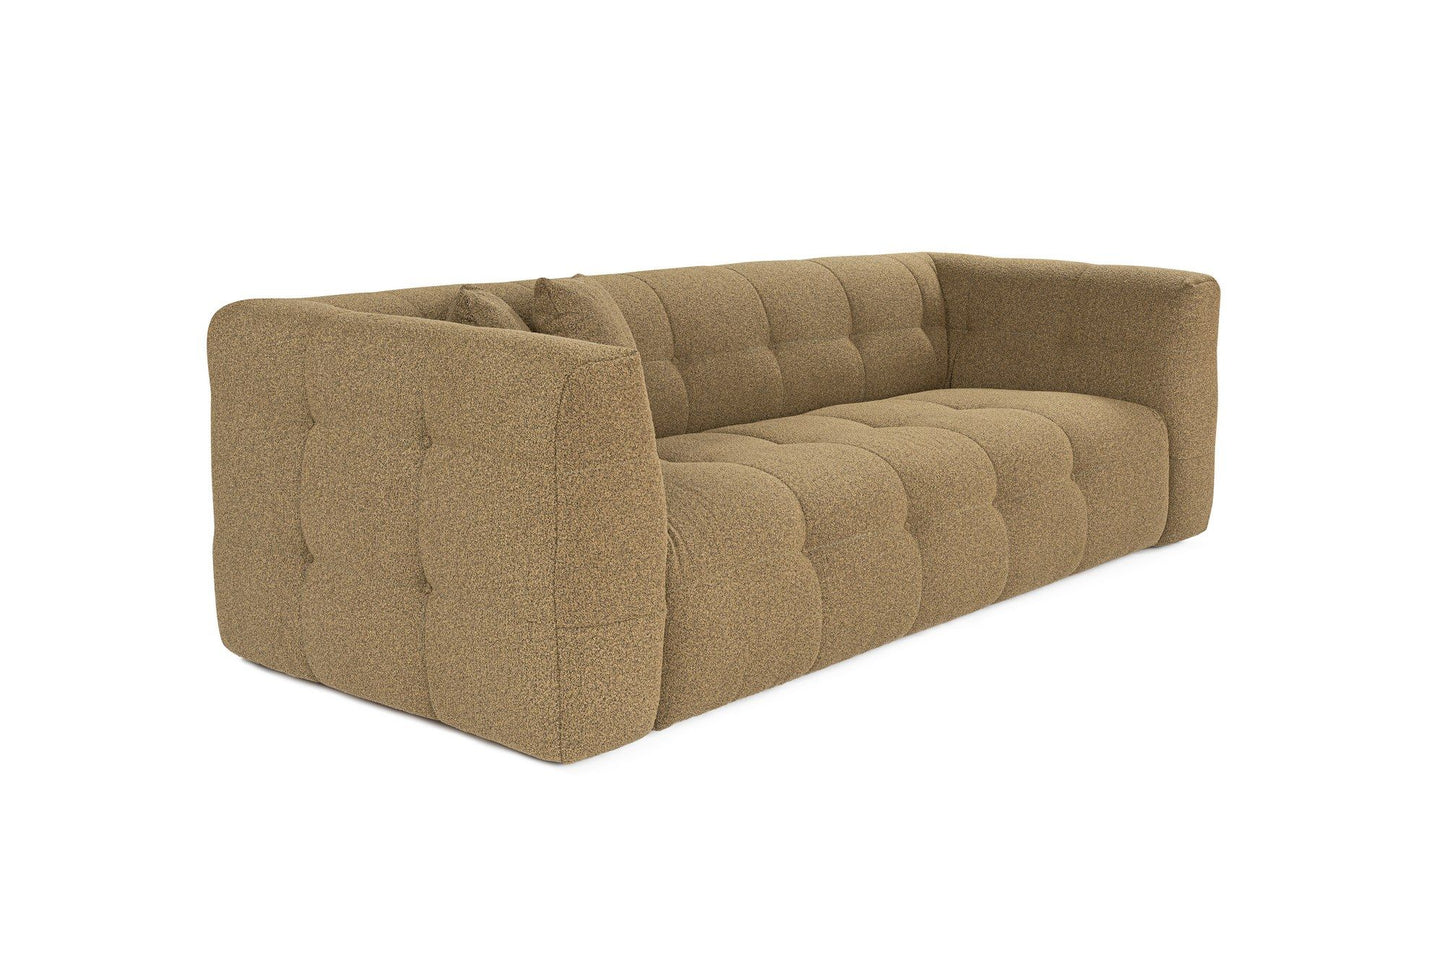 Cady - Khaki - 3-Seat Sofa